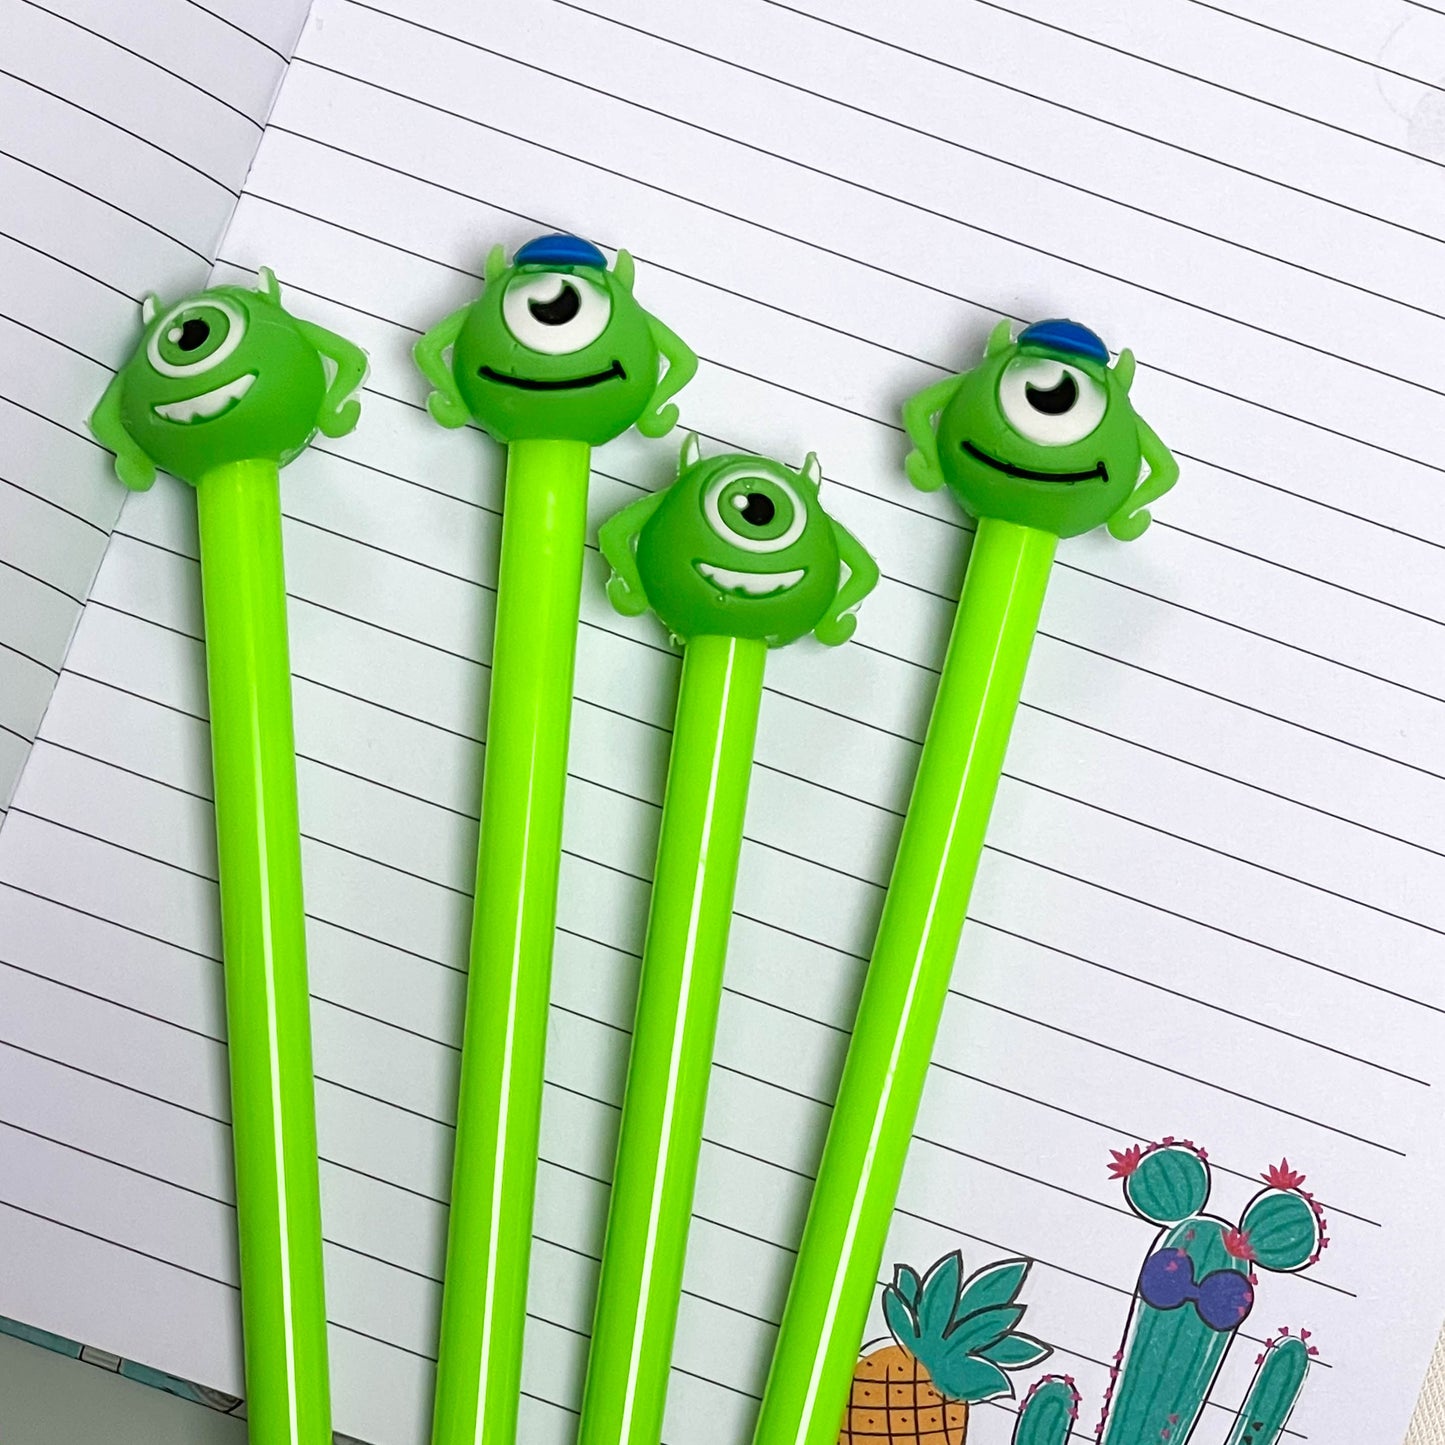 Mike Monsters Inc novelty pen